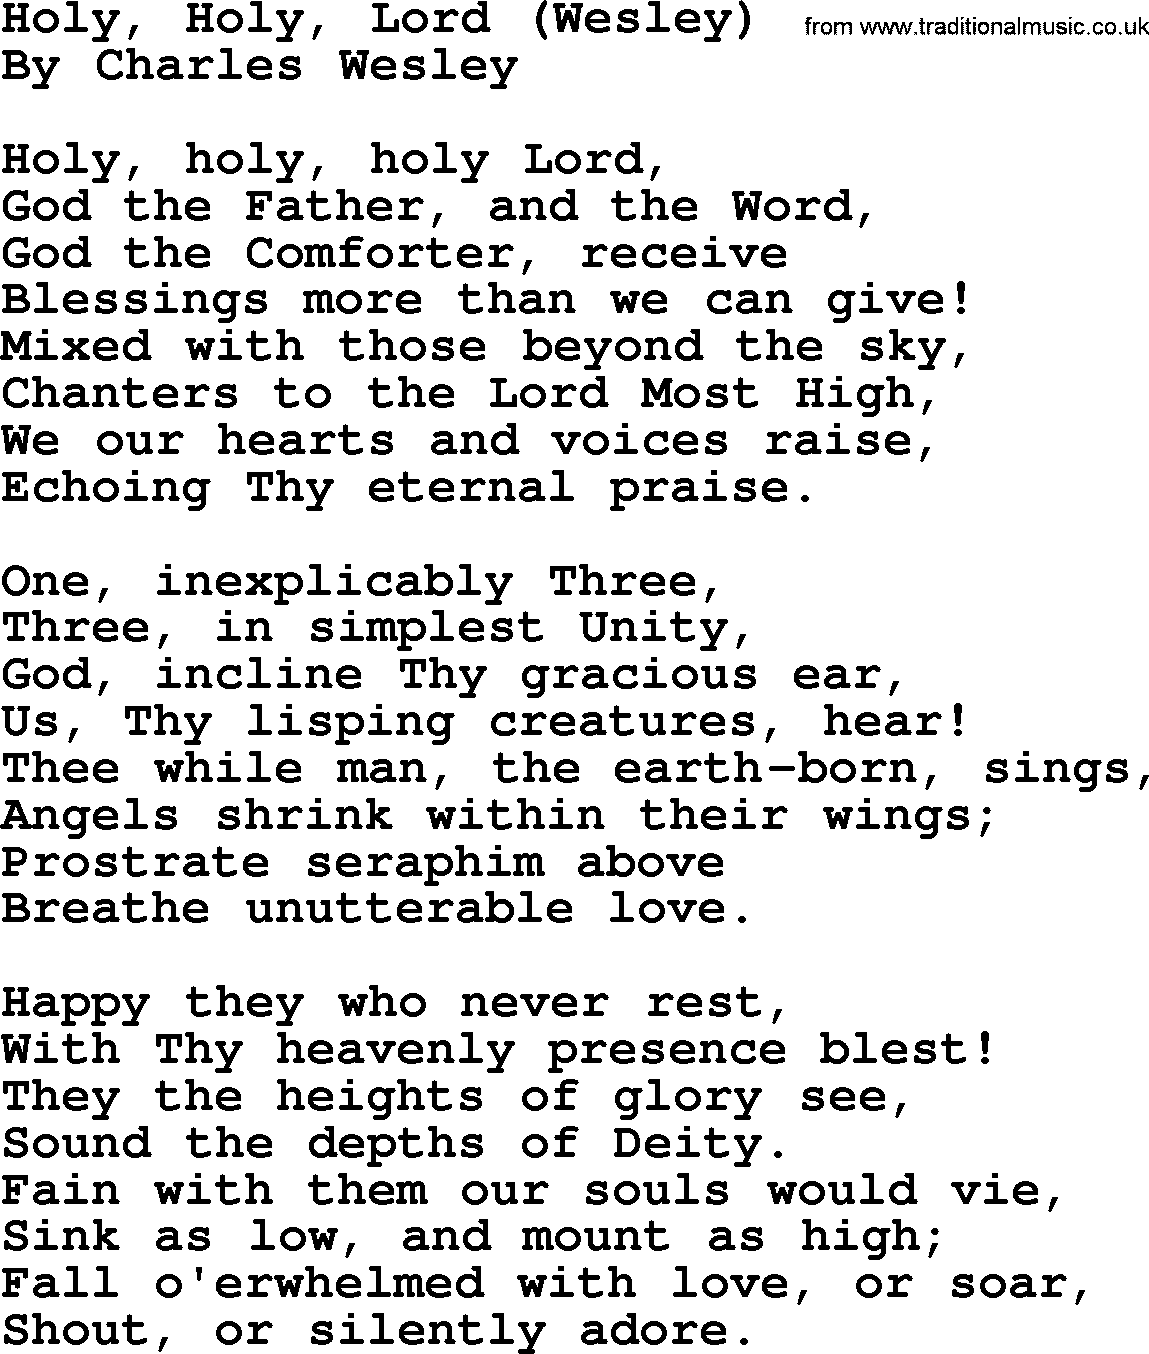 Charles Wesley hymn: Holy, Holy, Lord (Wesley), lyrics